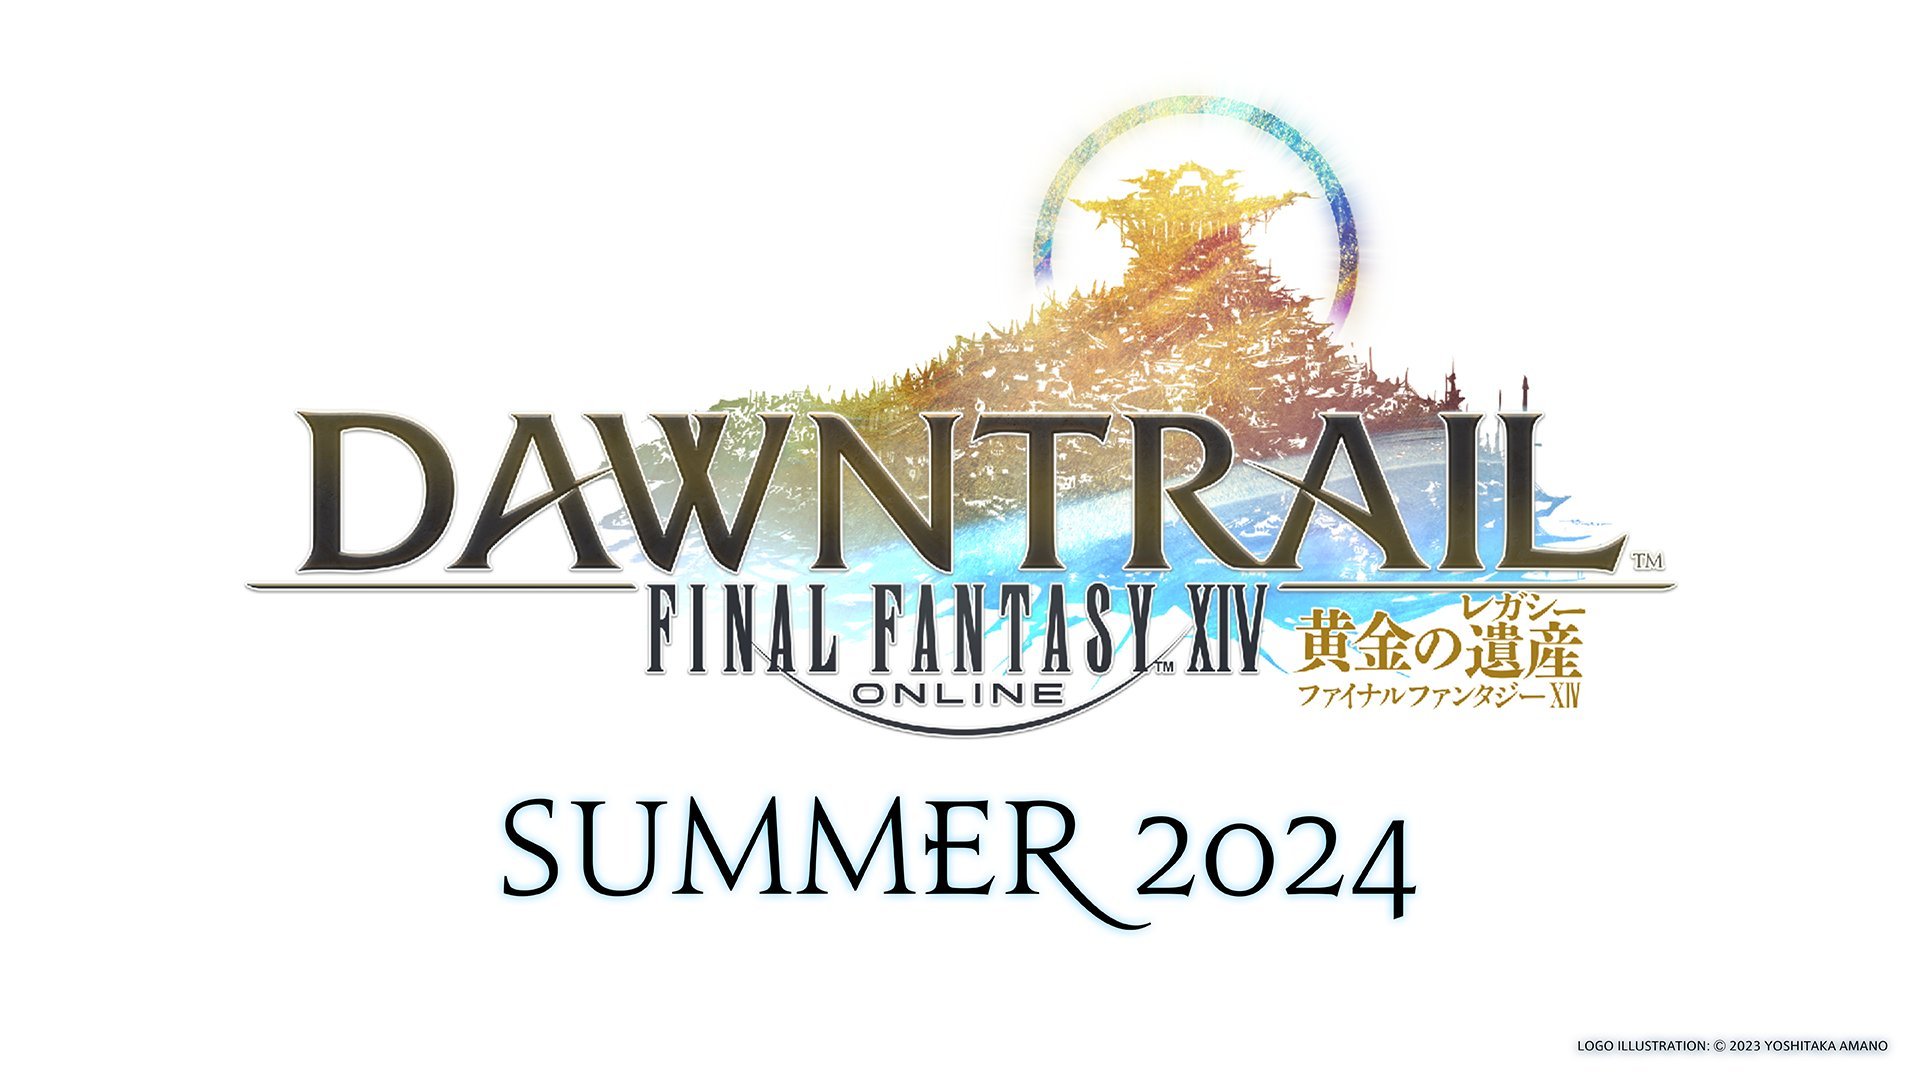 Final Fantasy XIV' comes to Xbox next spring